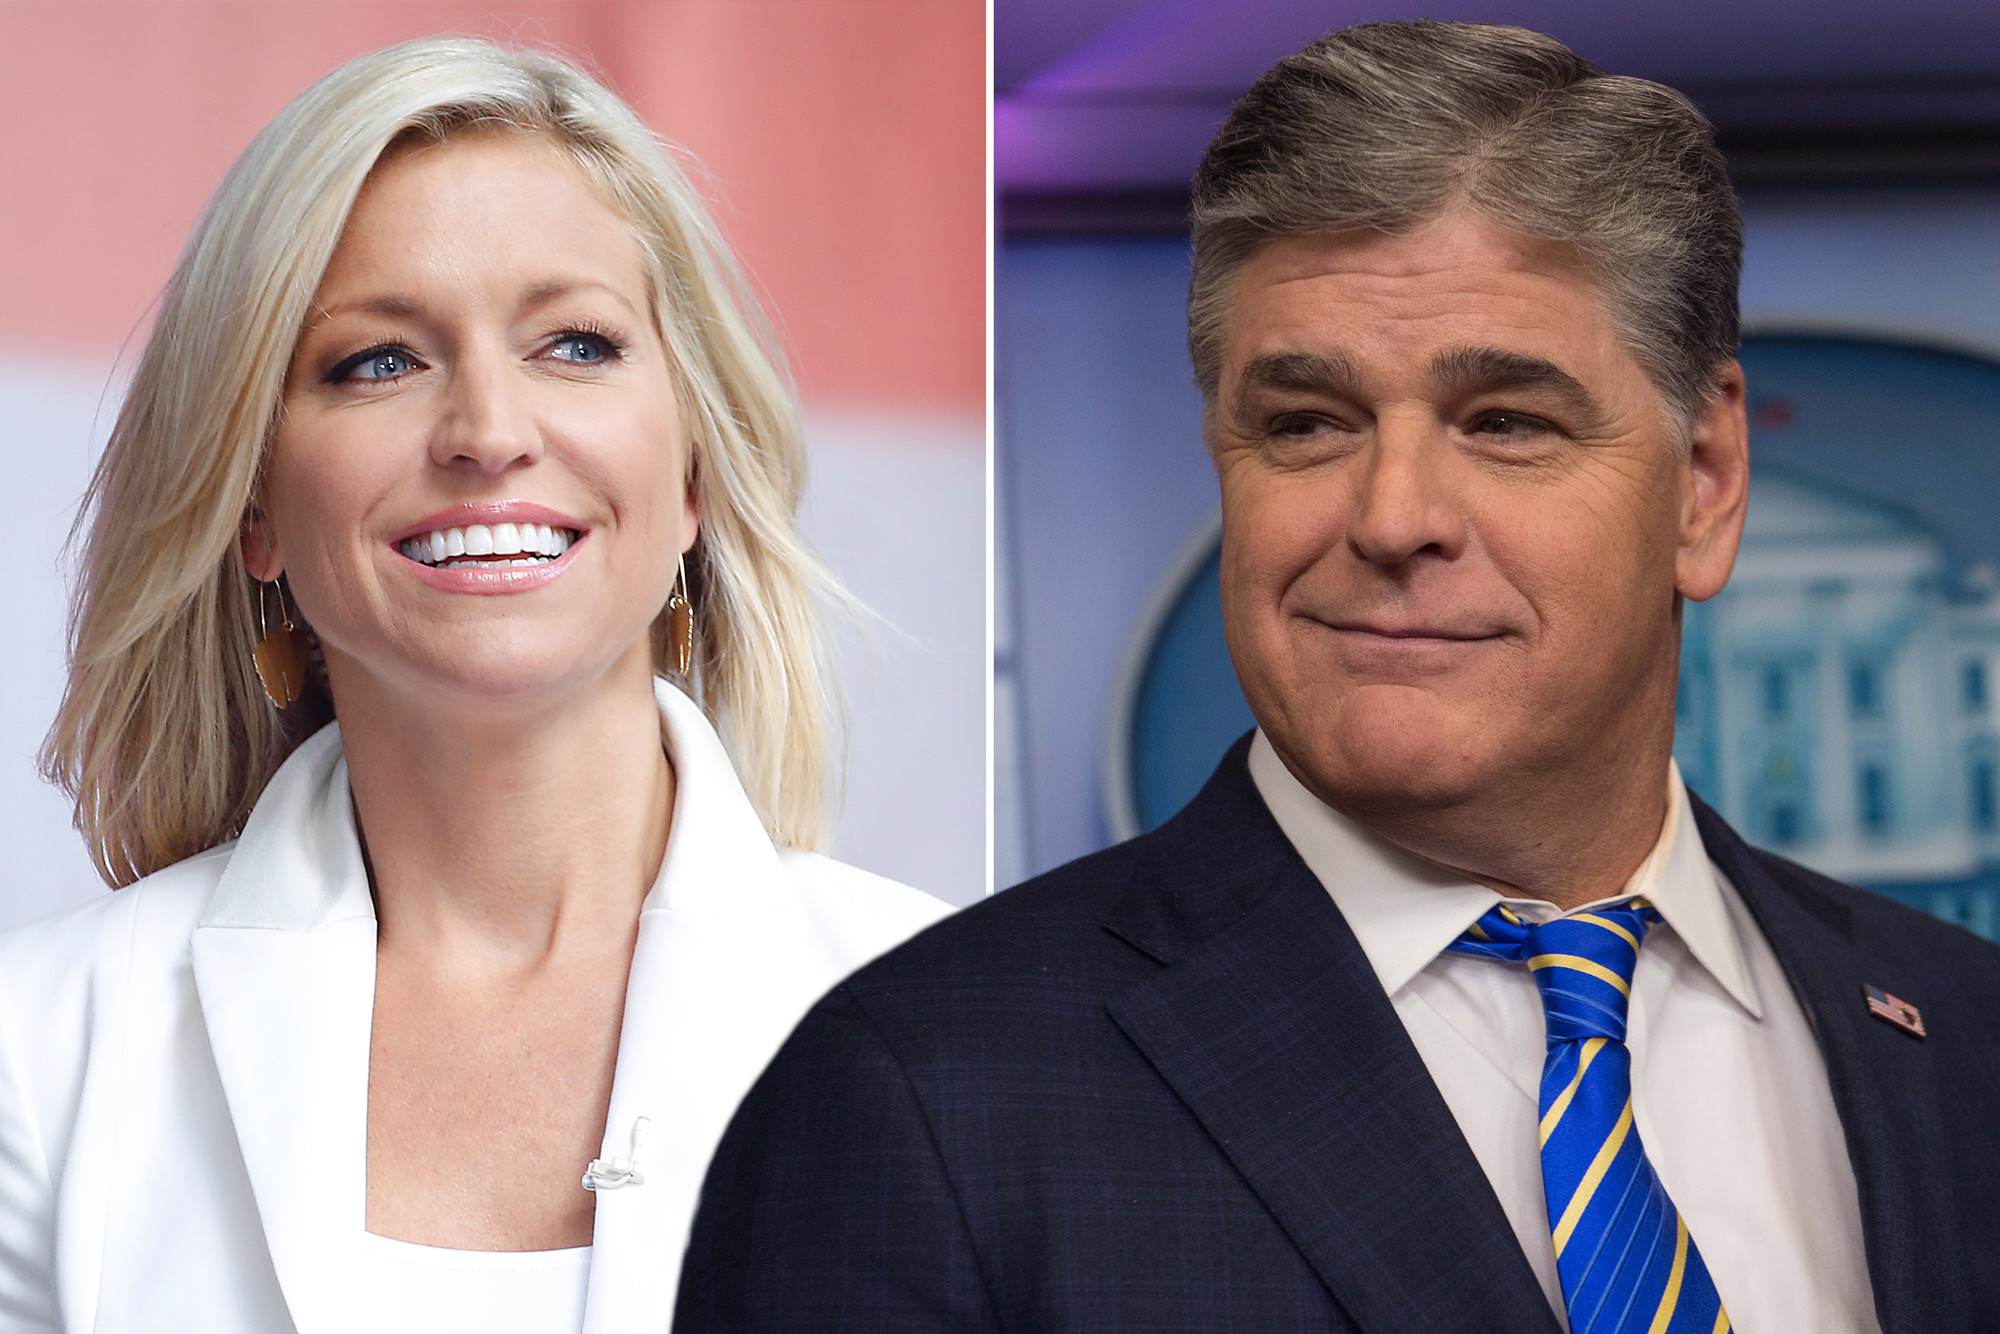 Sean Hannity is dating 'Fox & Friends' co-host Ainsley Earhardt